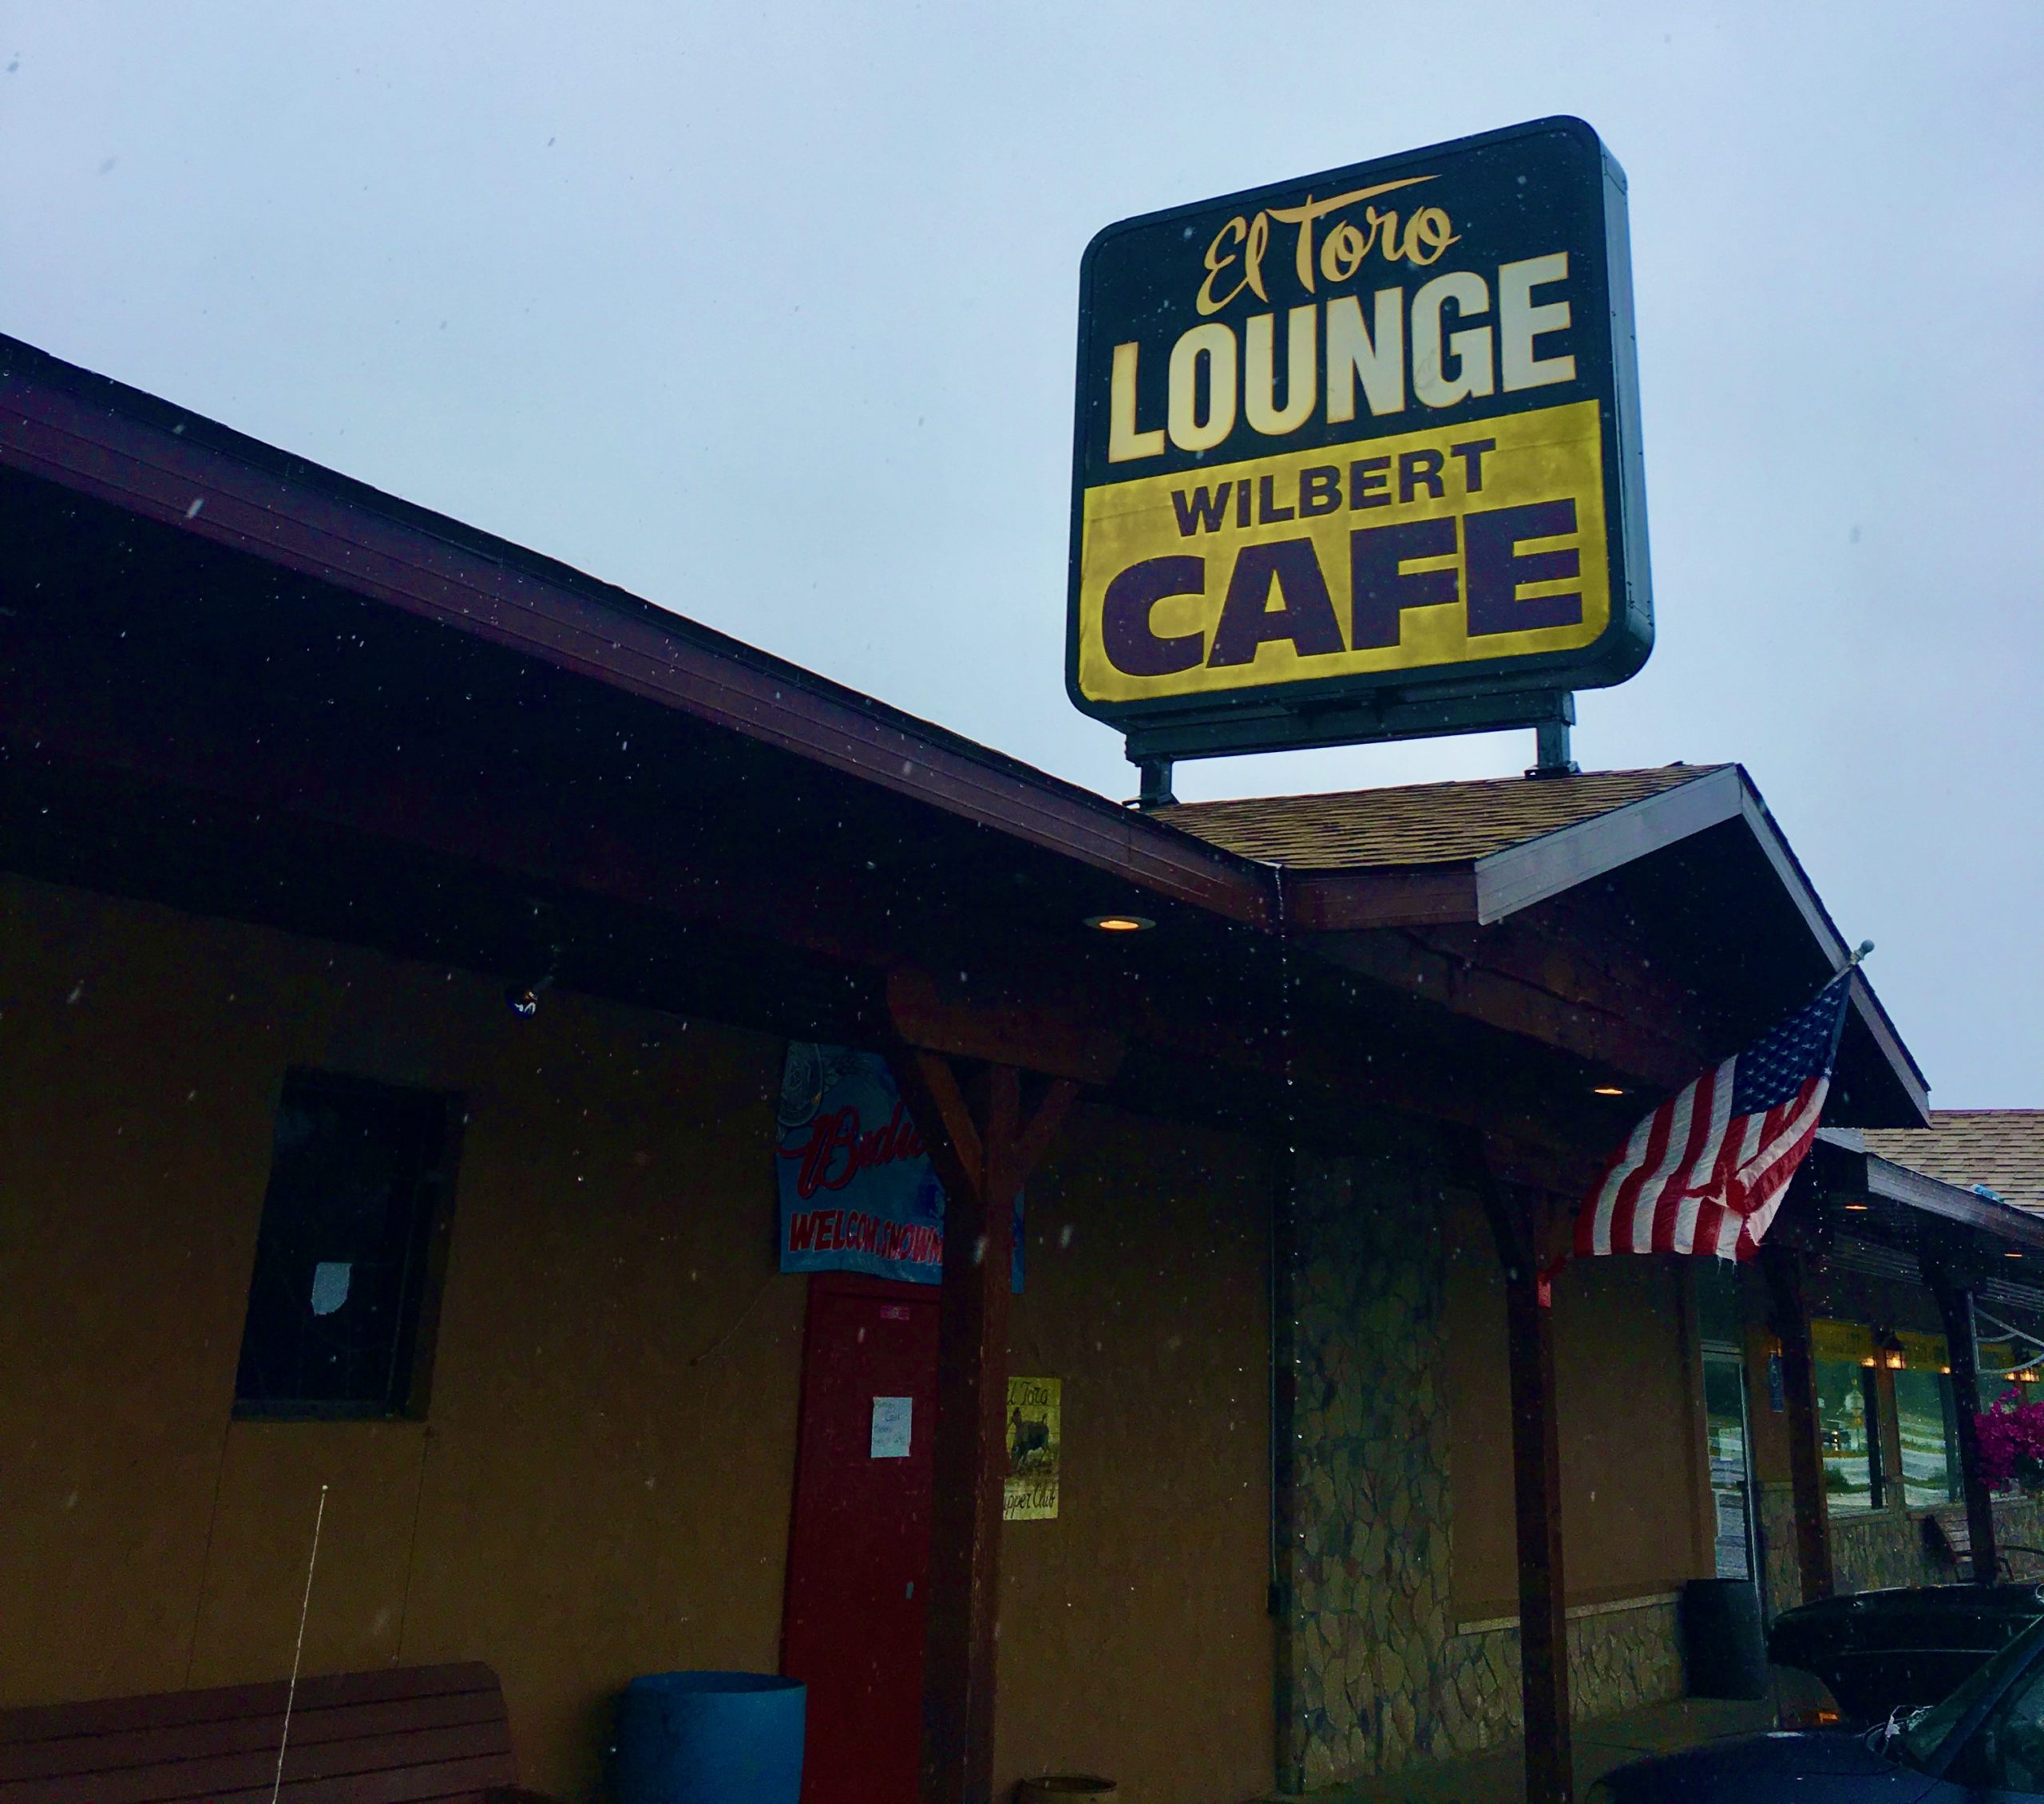 El Toro Lounge & WIlbert Cafe